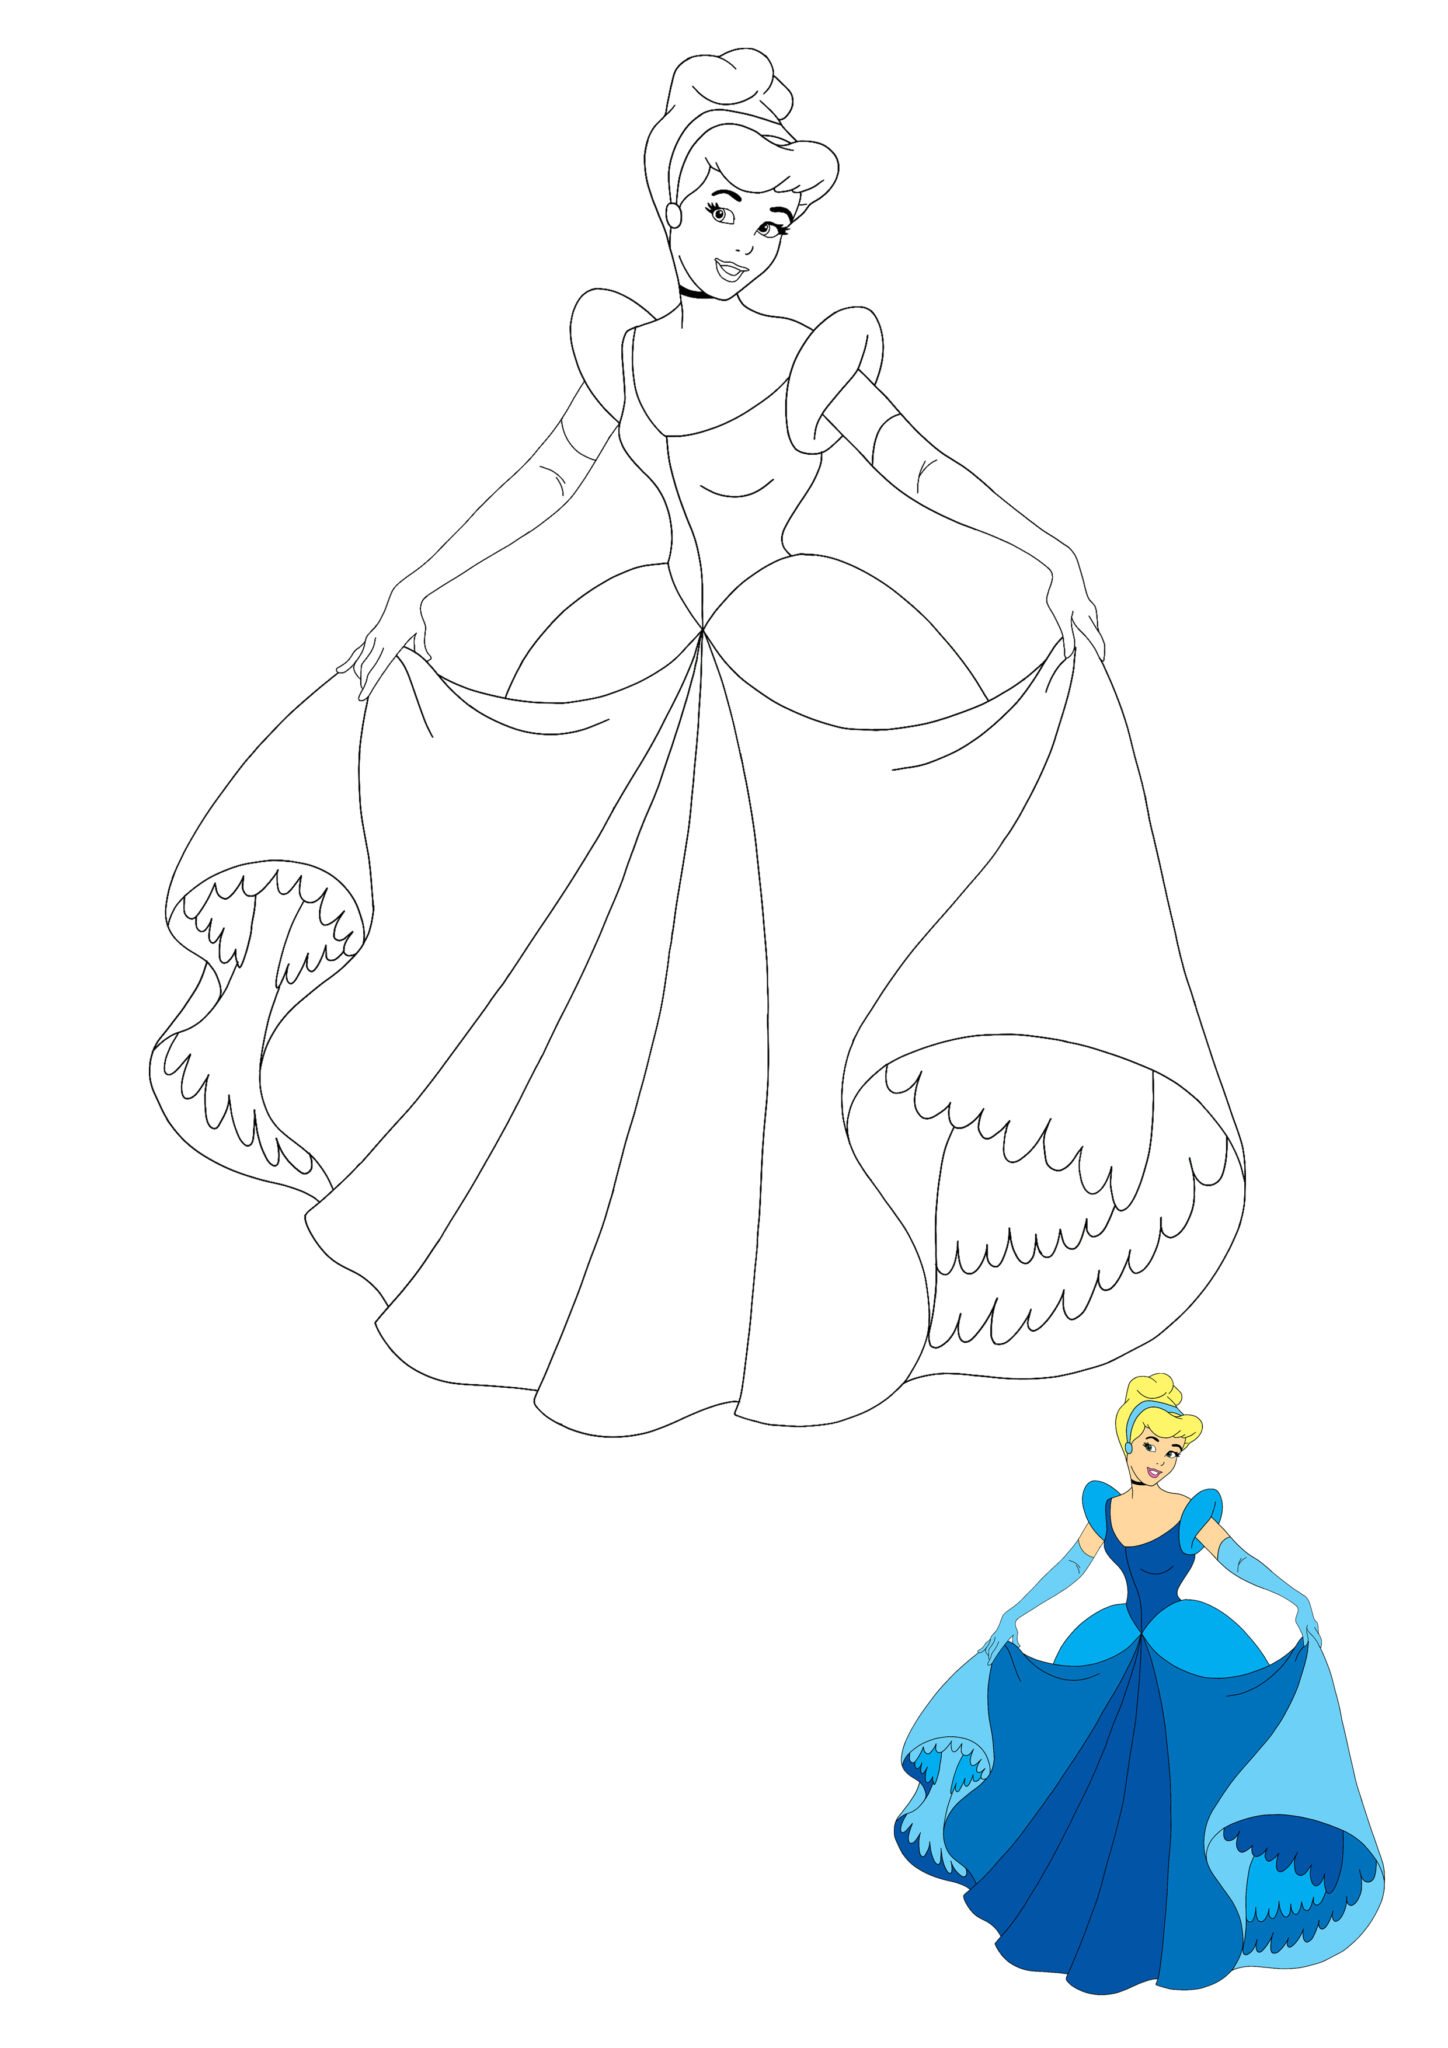 Disney Princess Cinderella Coloring Pages - 2 Free Coloring Sheets (2021)